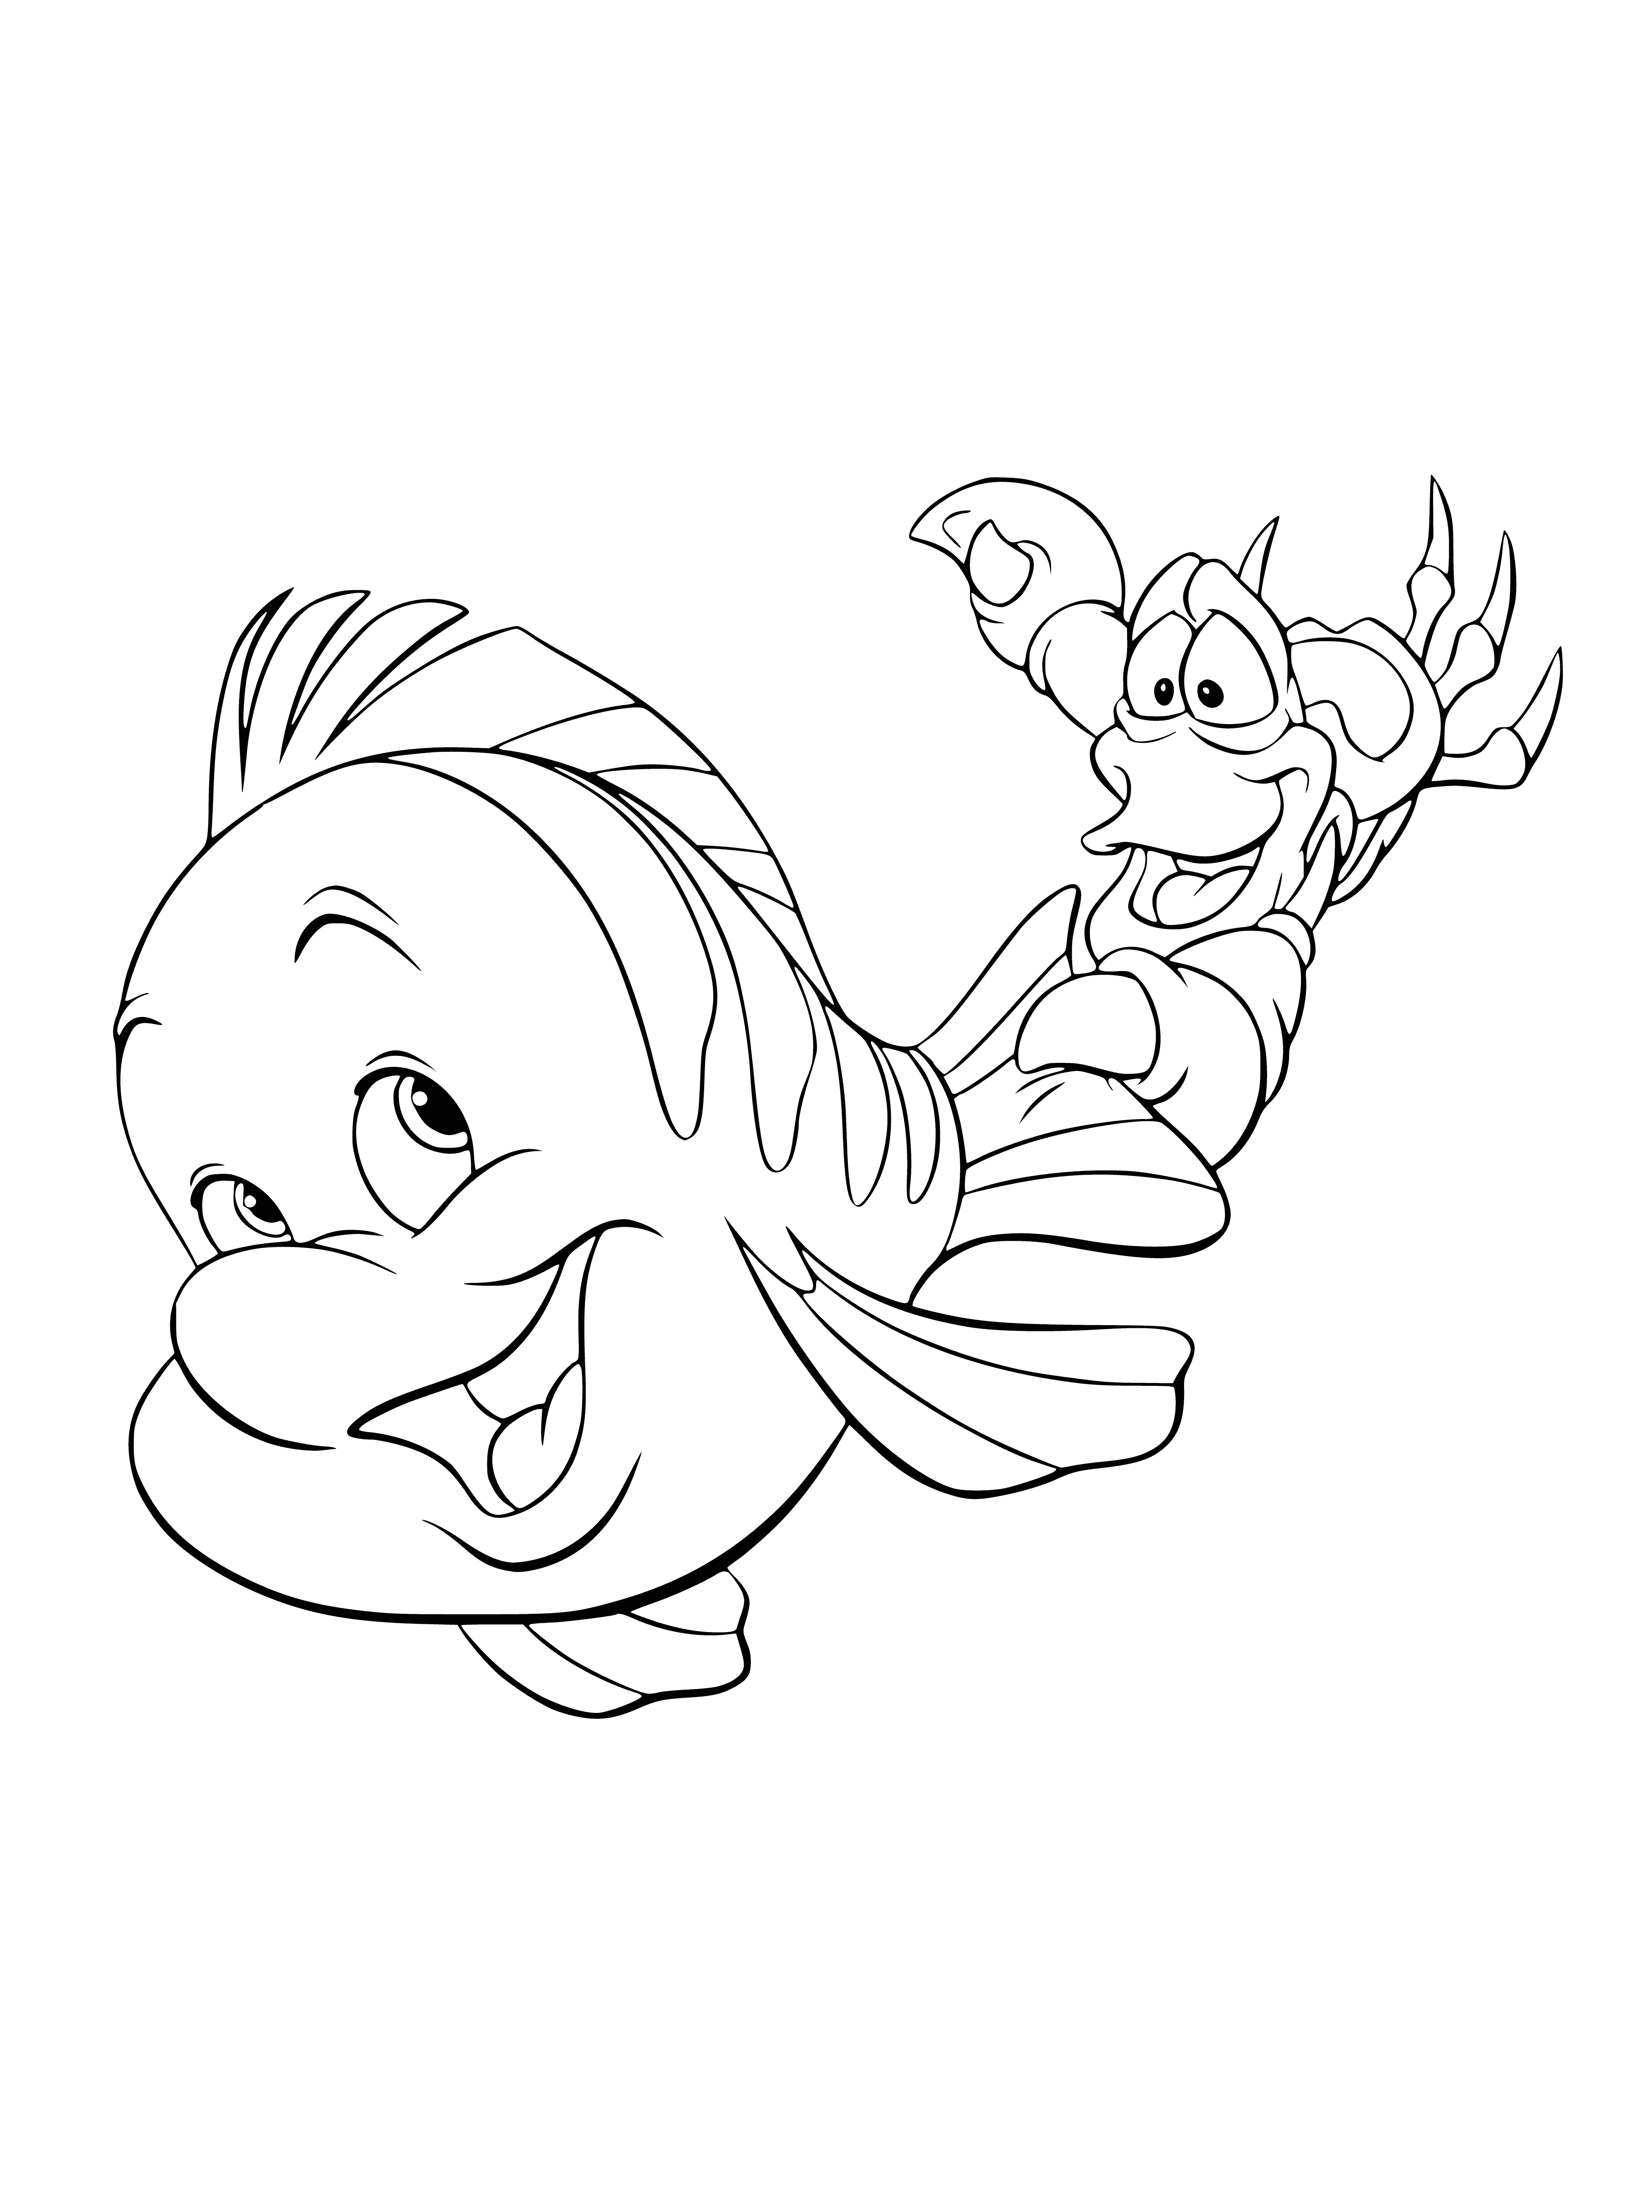 Flounder and Sebastian coloring page